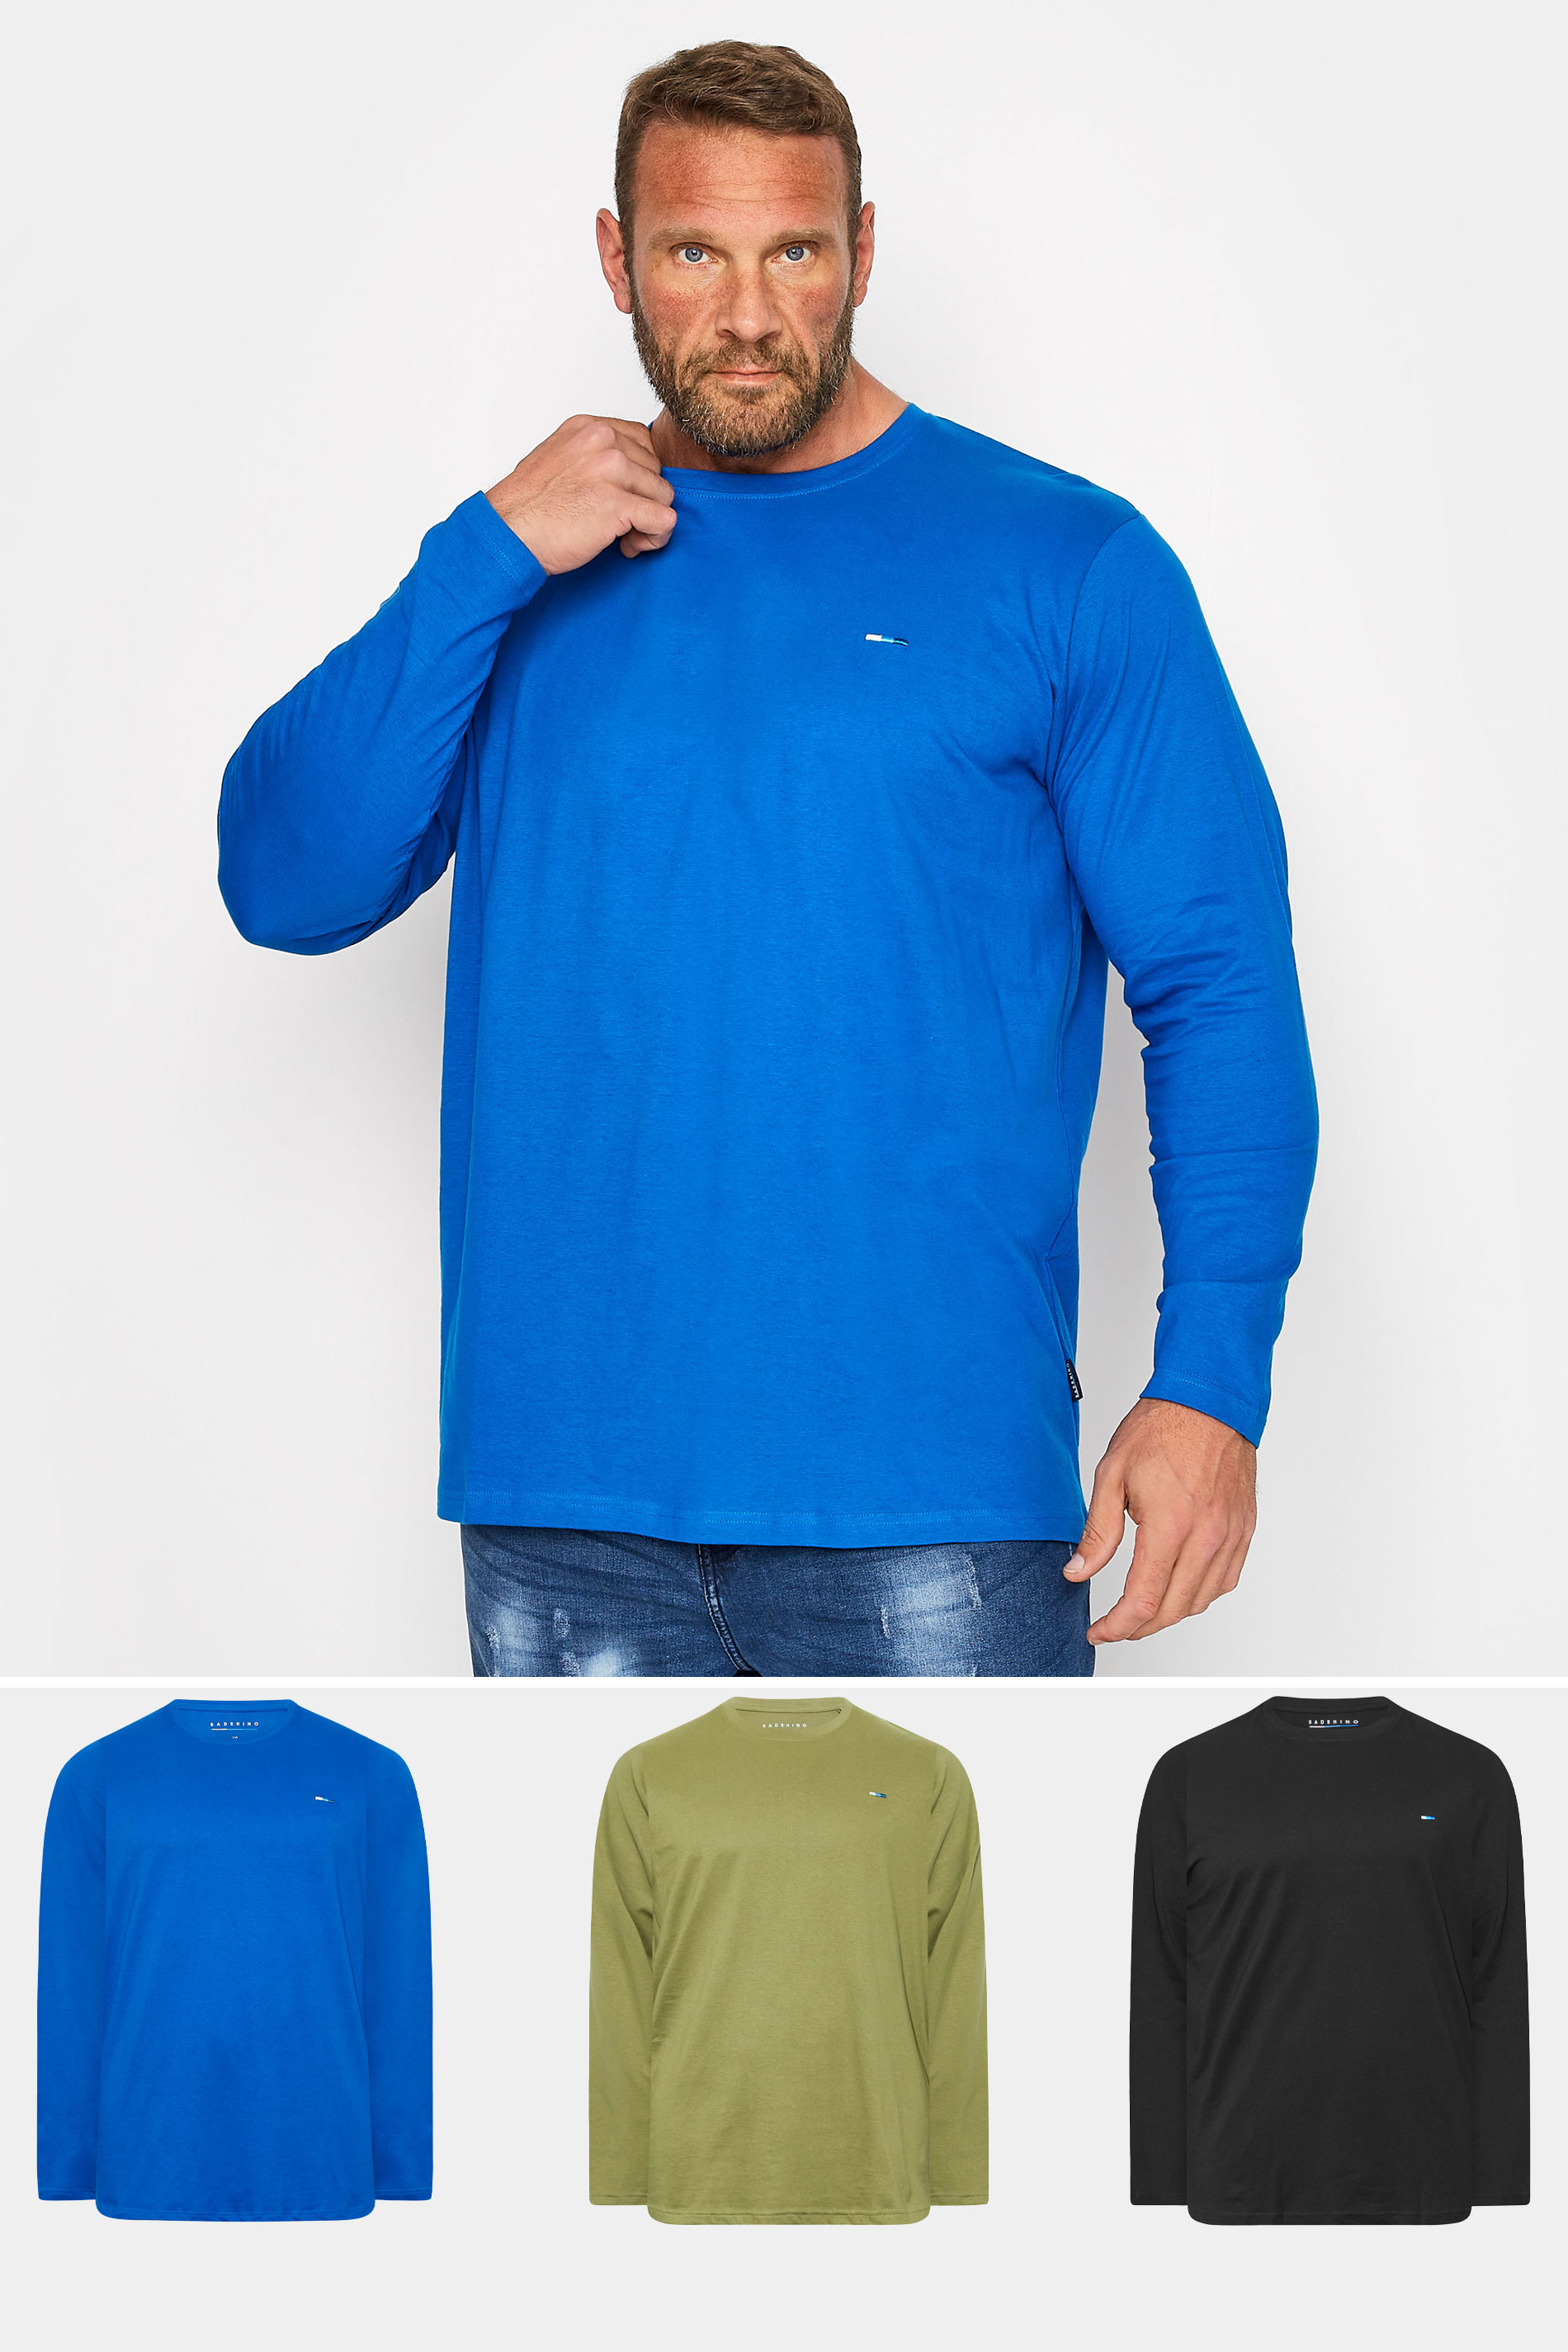 BadRhino Big & Tall 3 Pack Blue & Khaki Green Long Sleeve T-Shirts | BadRhino 1